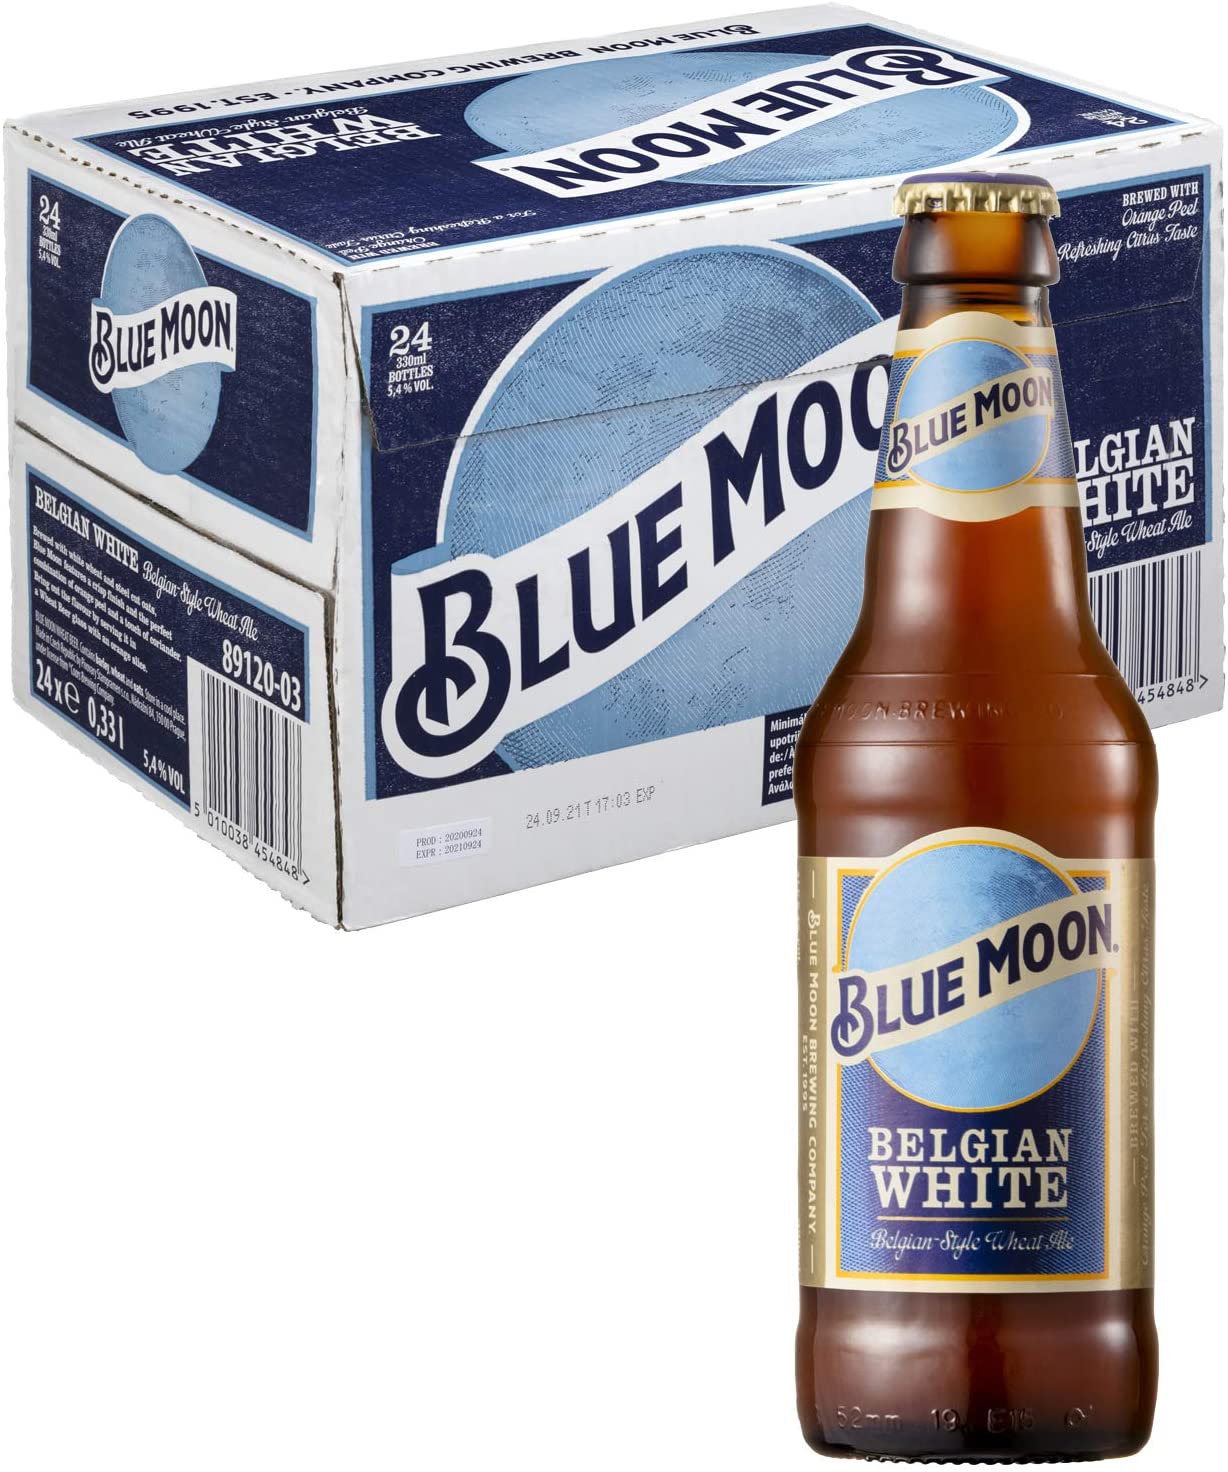 Blue Moon Craft Beer - Belgian Style Wheat Ale mit 5,4%Vol.